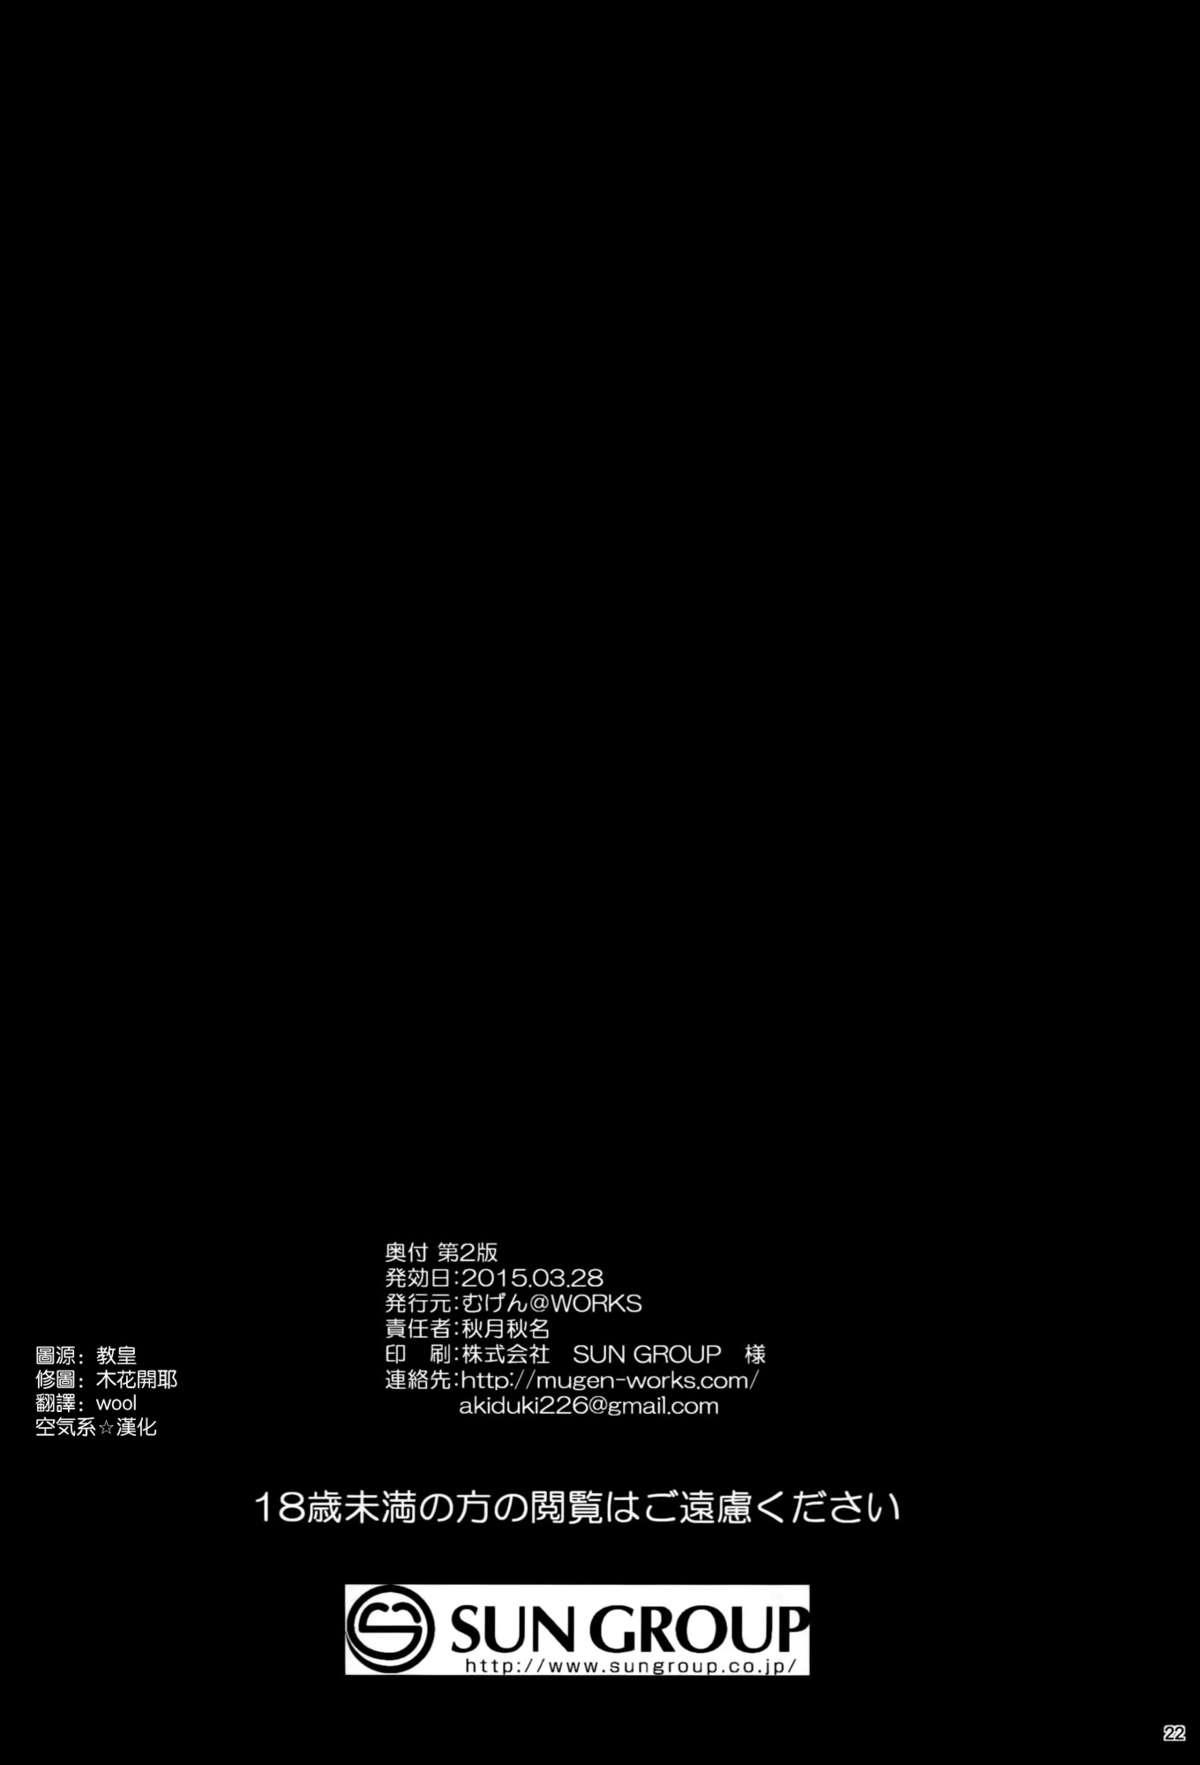 Comic One 300 Years (Comic One) Final Fantasy VII (Comic One) Yakiniku Teikoku (HayateMegumi) Live Sashi Hitosuji 300-nen (FinalFantasy VII) Chinese-第1章-图片108